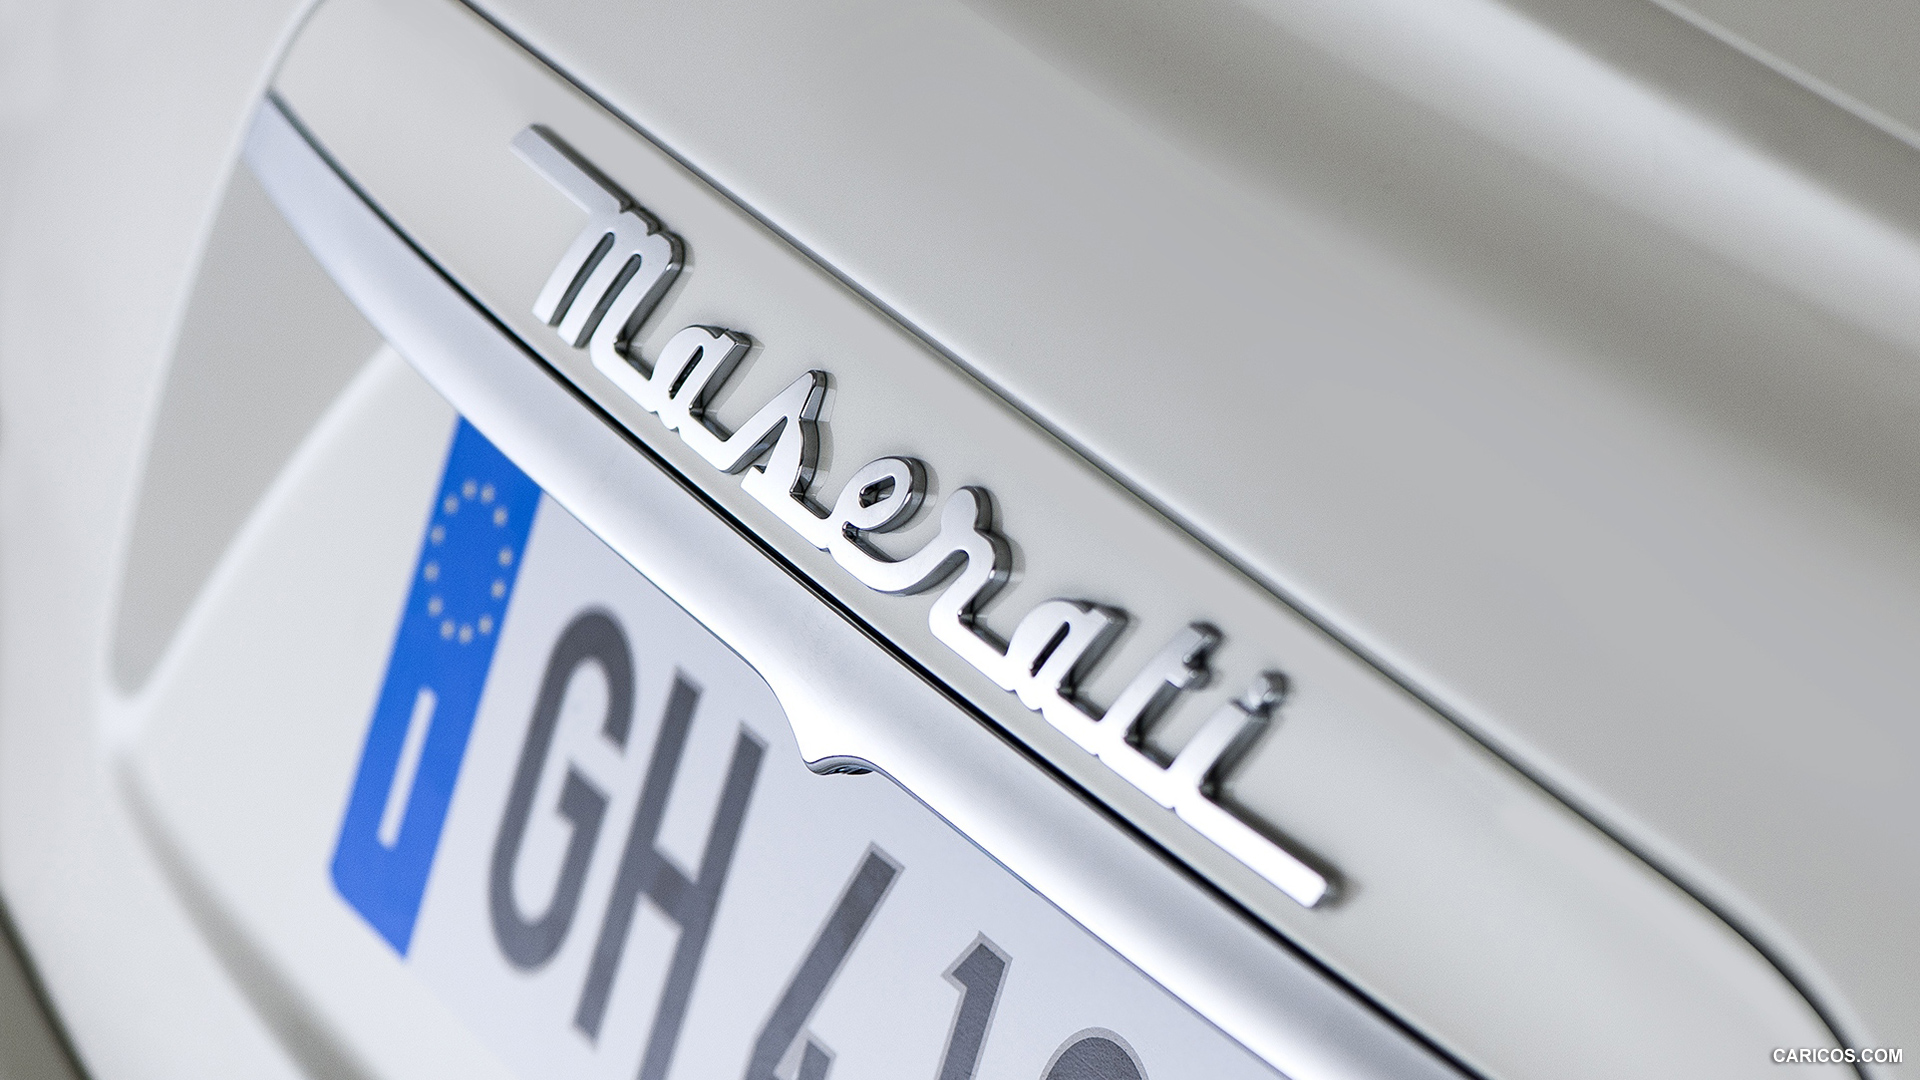 2014 Maserati Ghibli  - Badge, #151 of 196